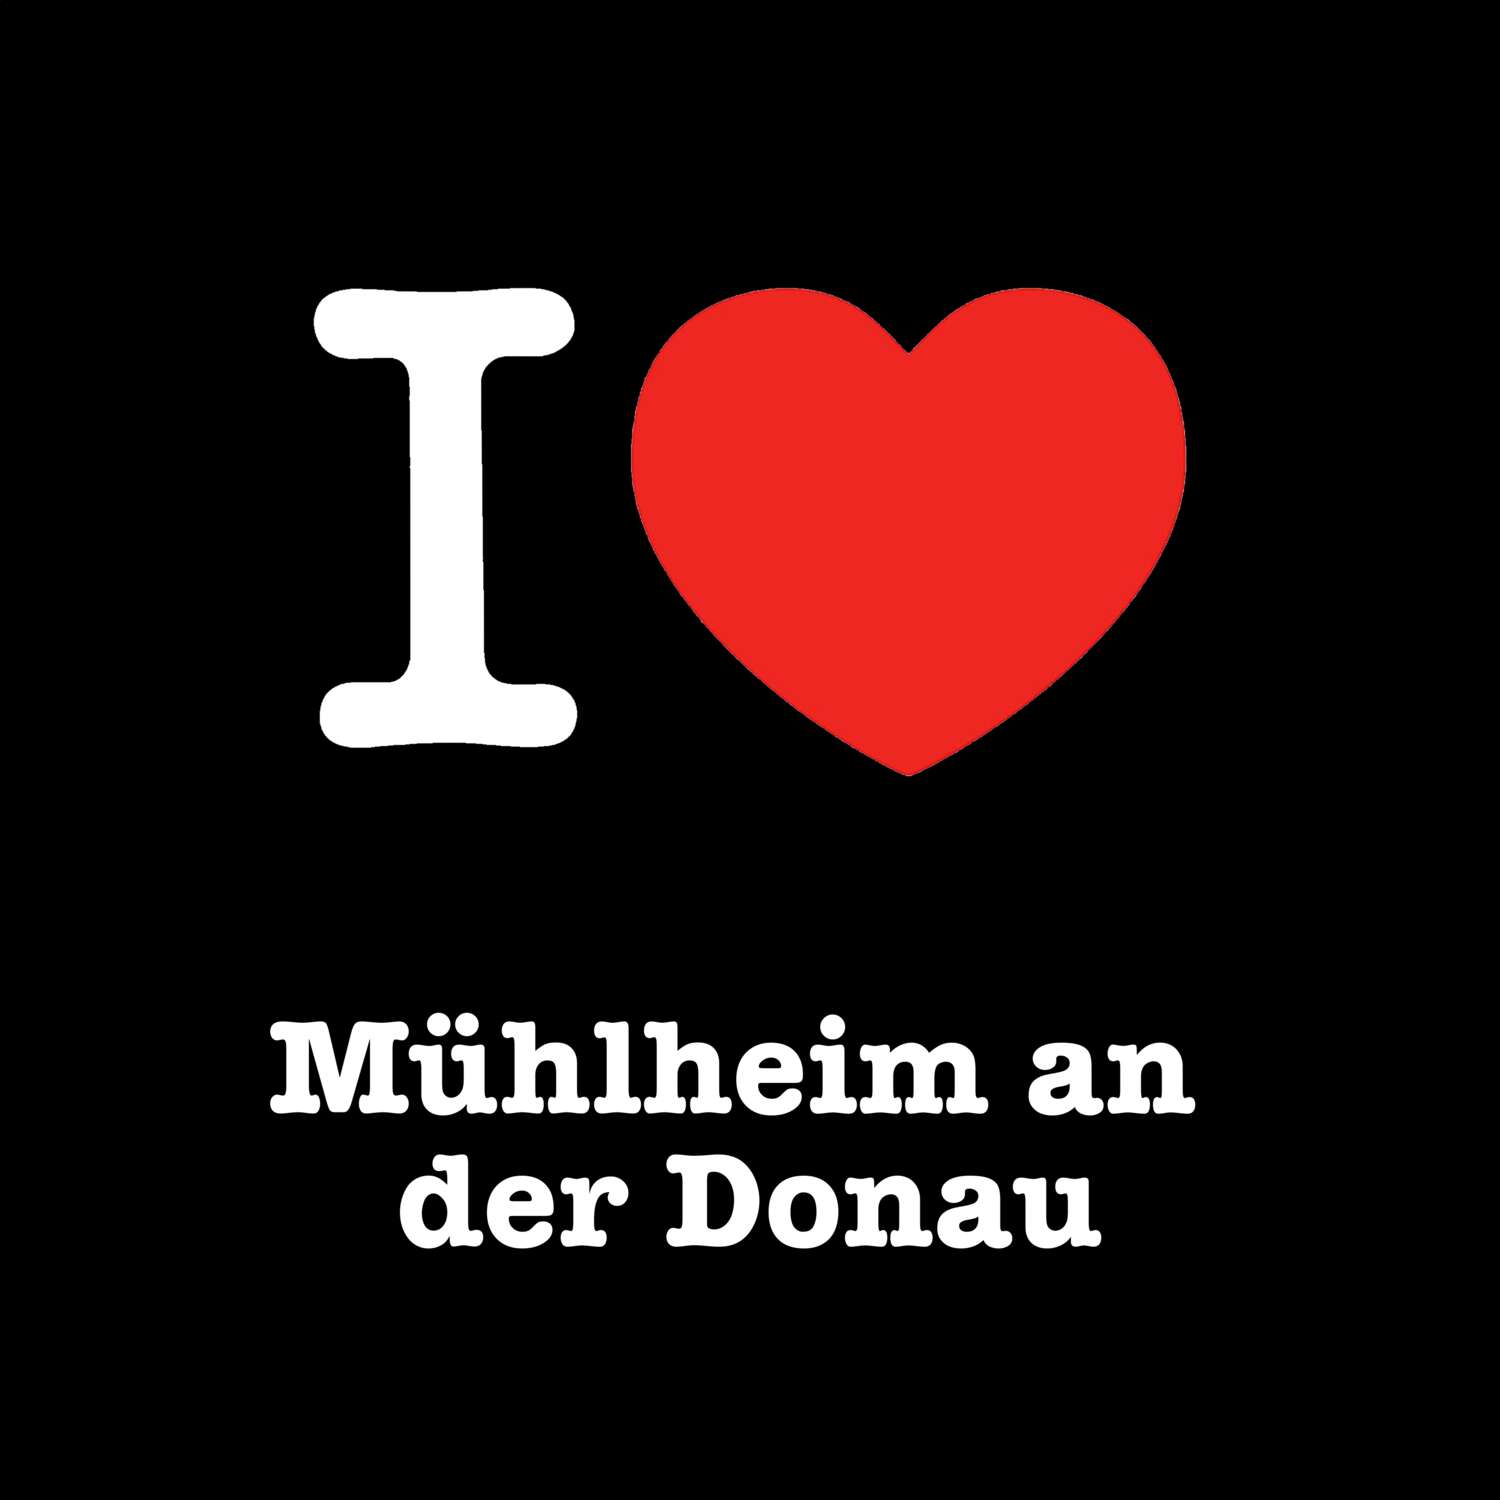 Mühlheim an der Donau T-Shirt »I love«